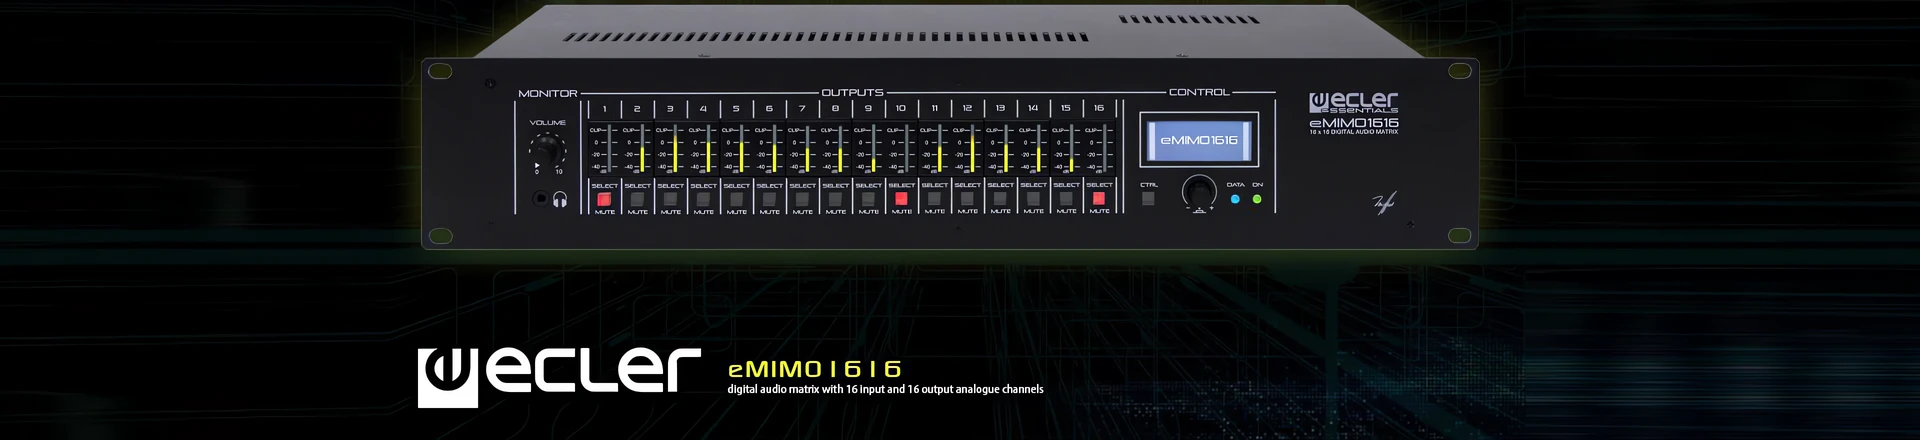 Ecler eMIMO1616 - Nowa cyfrowa matryca audio